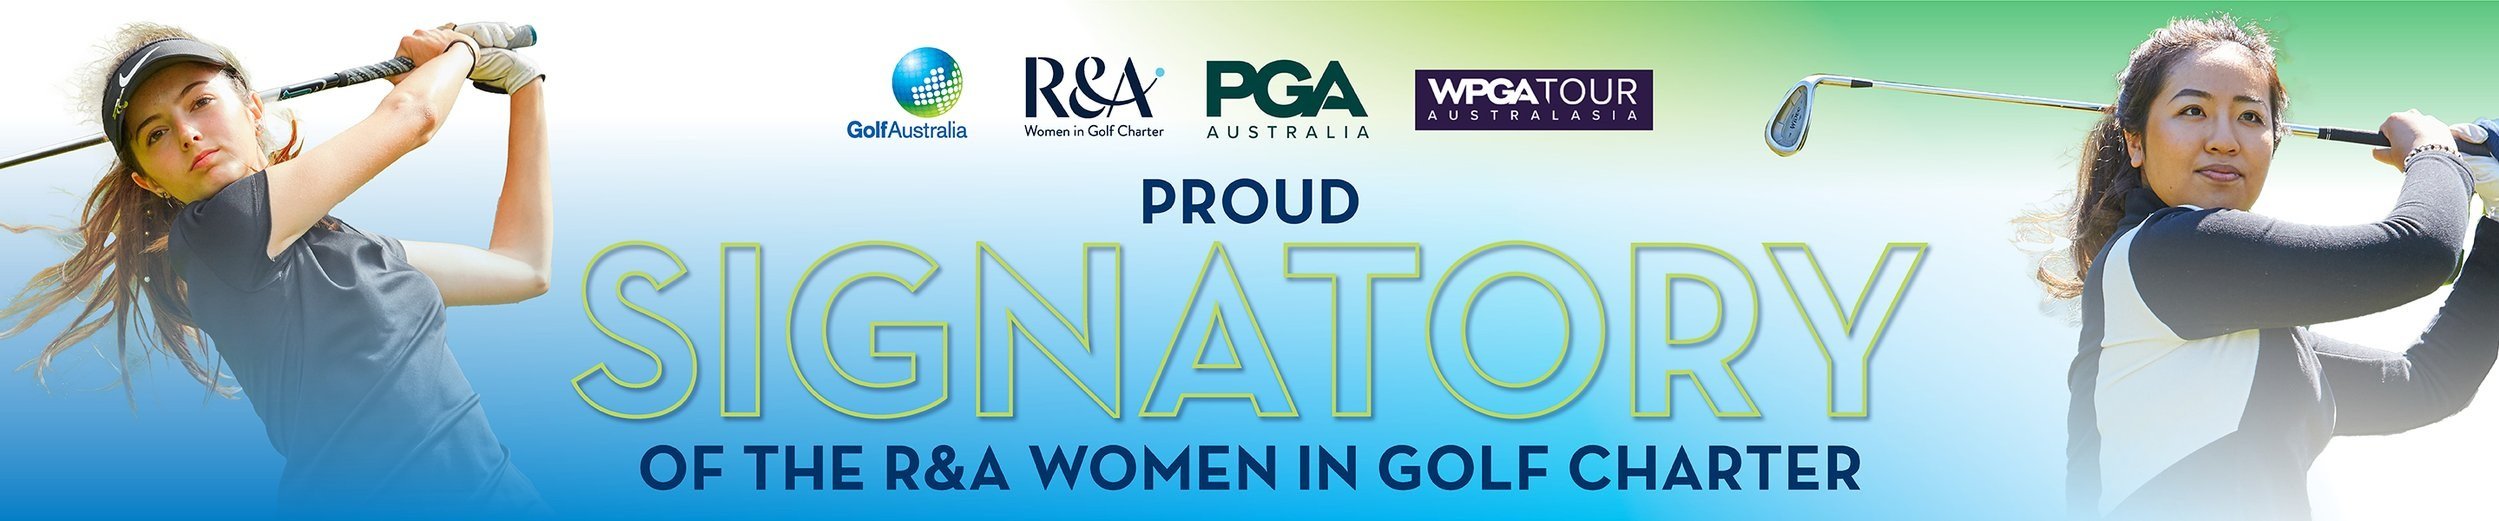 GA+Women+In+Golf+Charter+Web+Banner_2880x600px.jpg